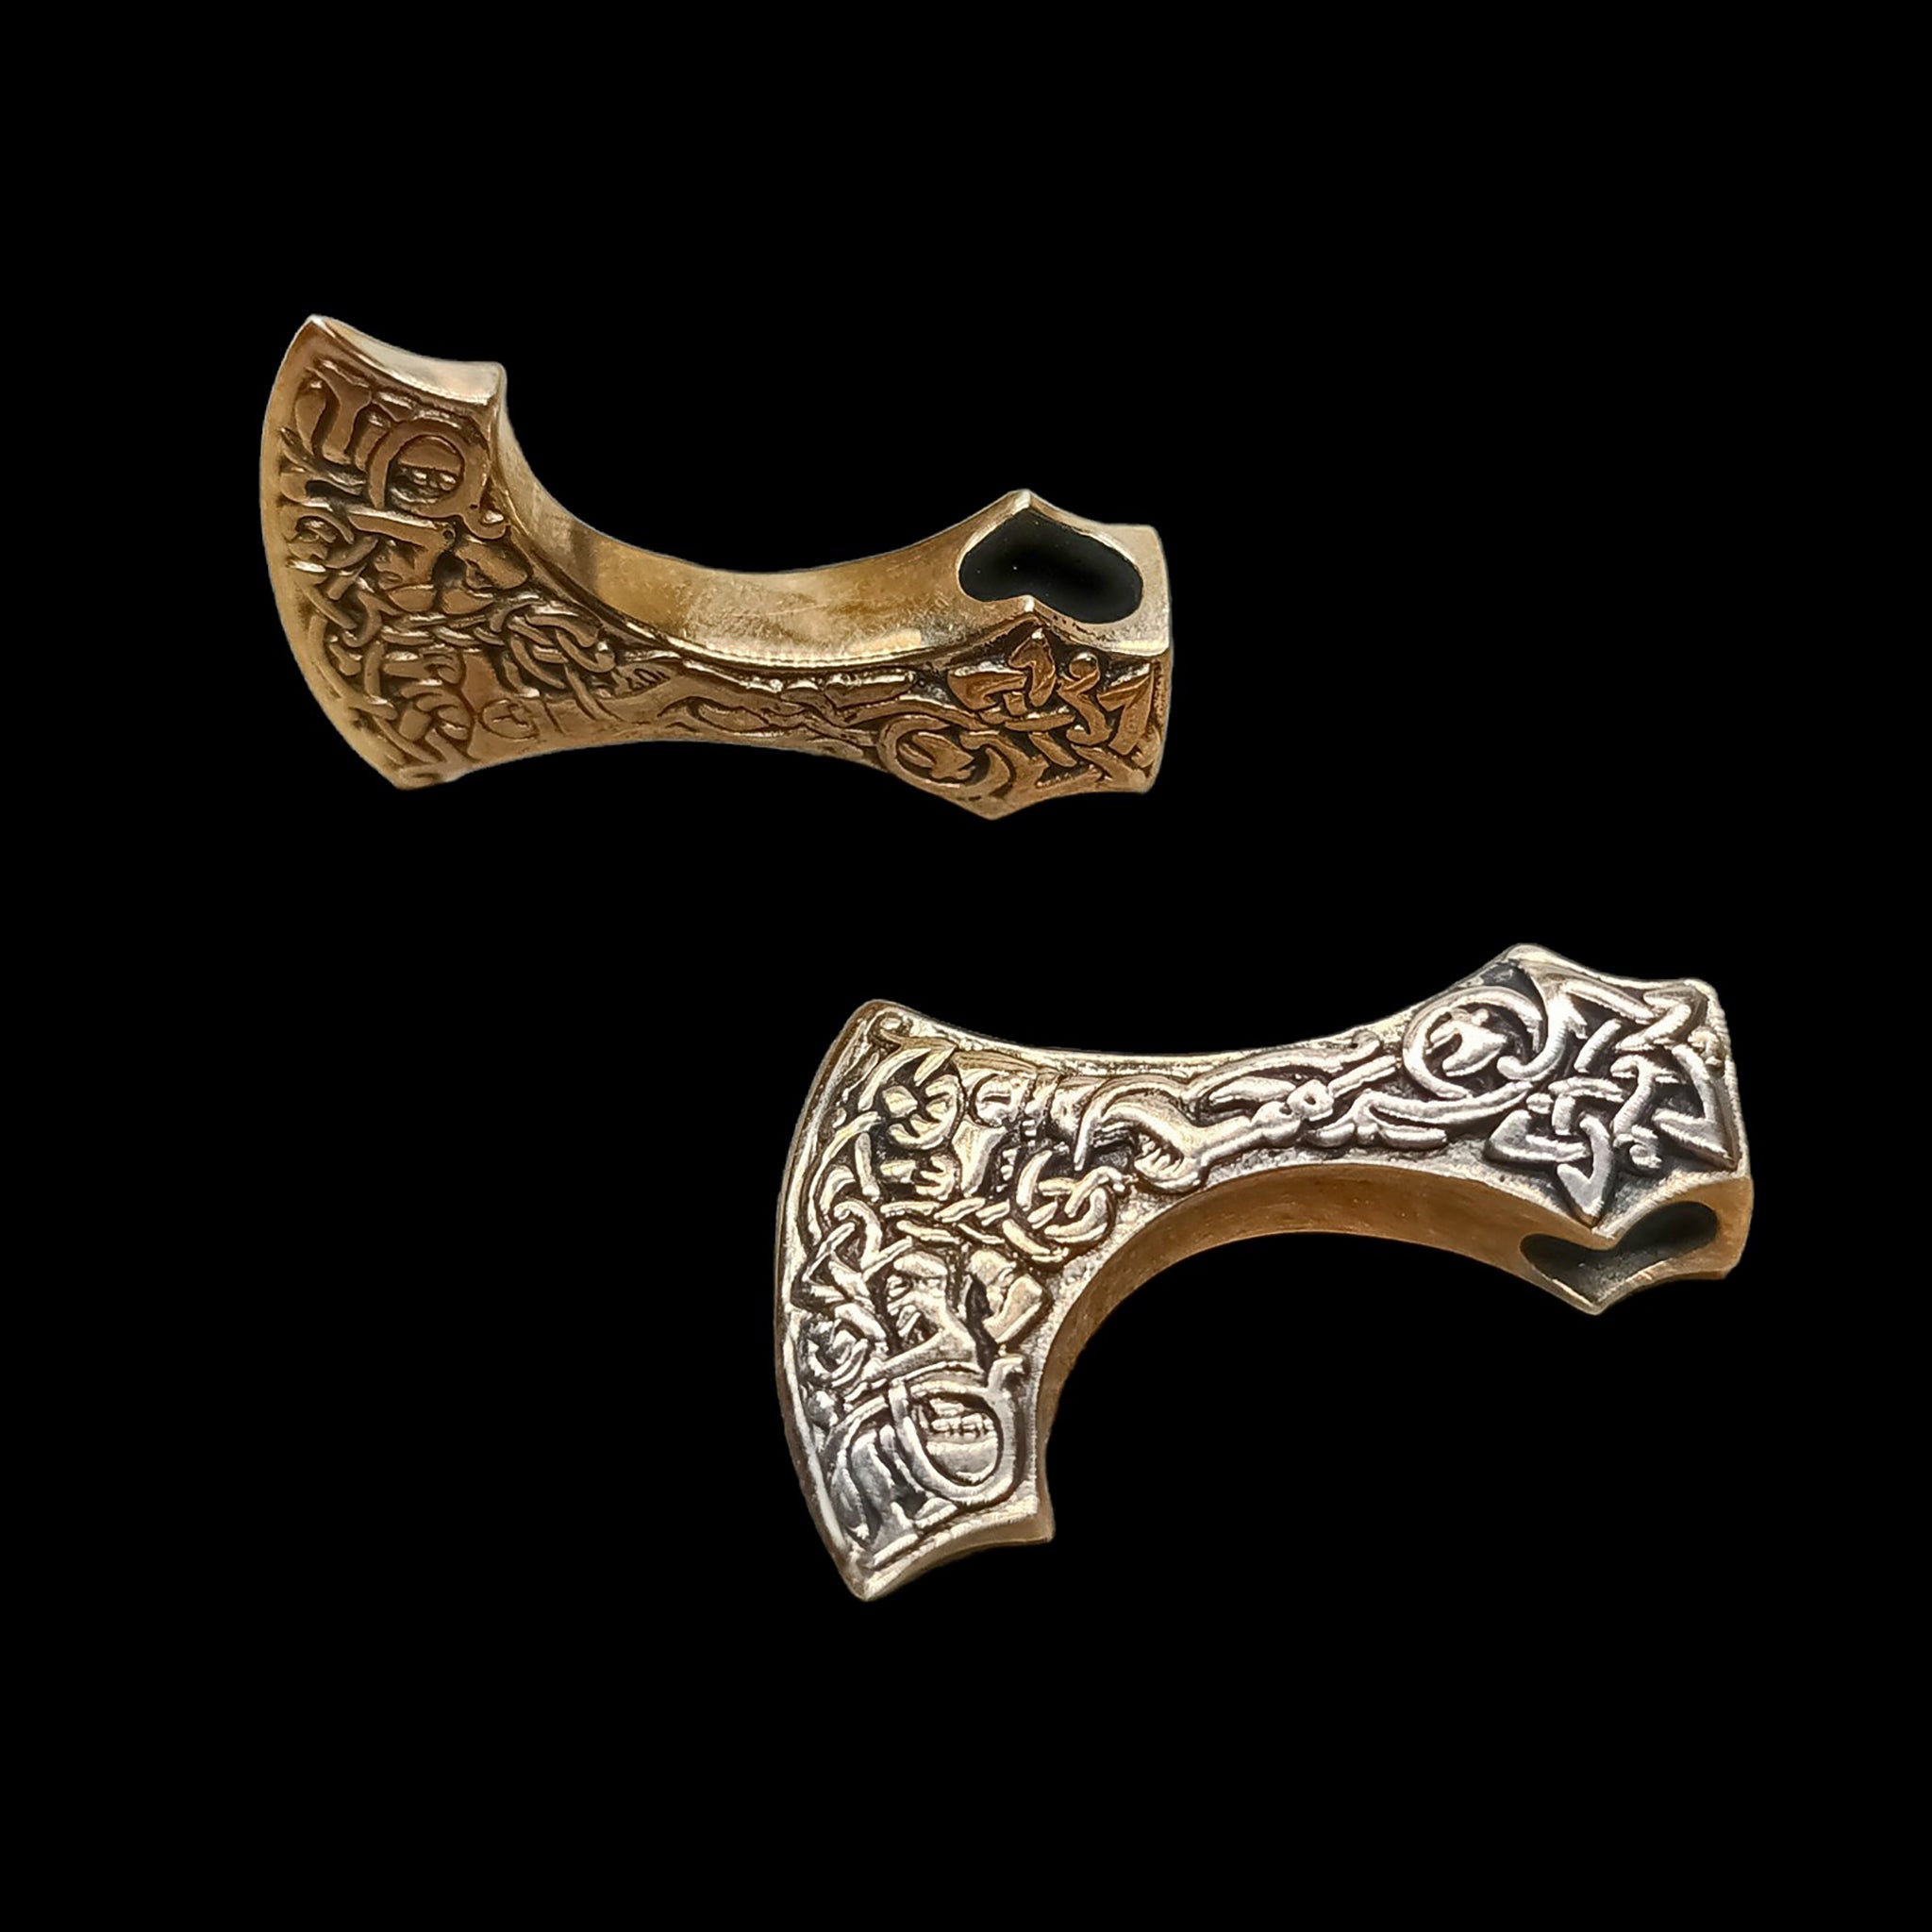 Bronze Bearded Axe Head Pendants - Front and Bottom Views